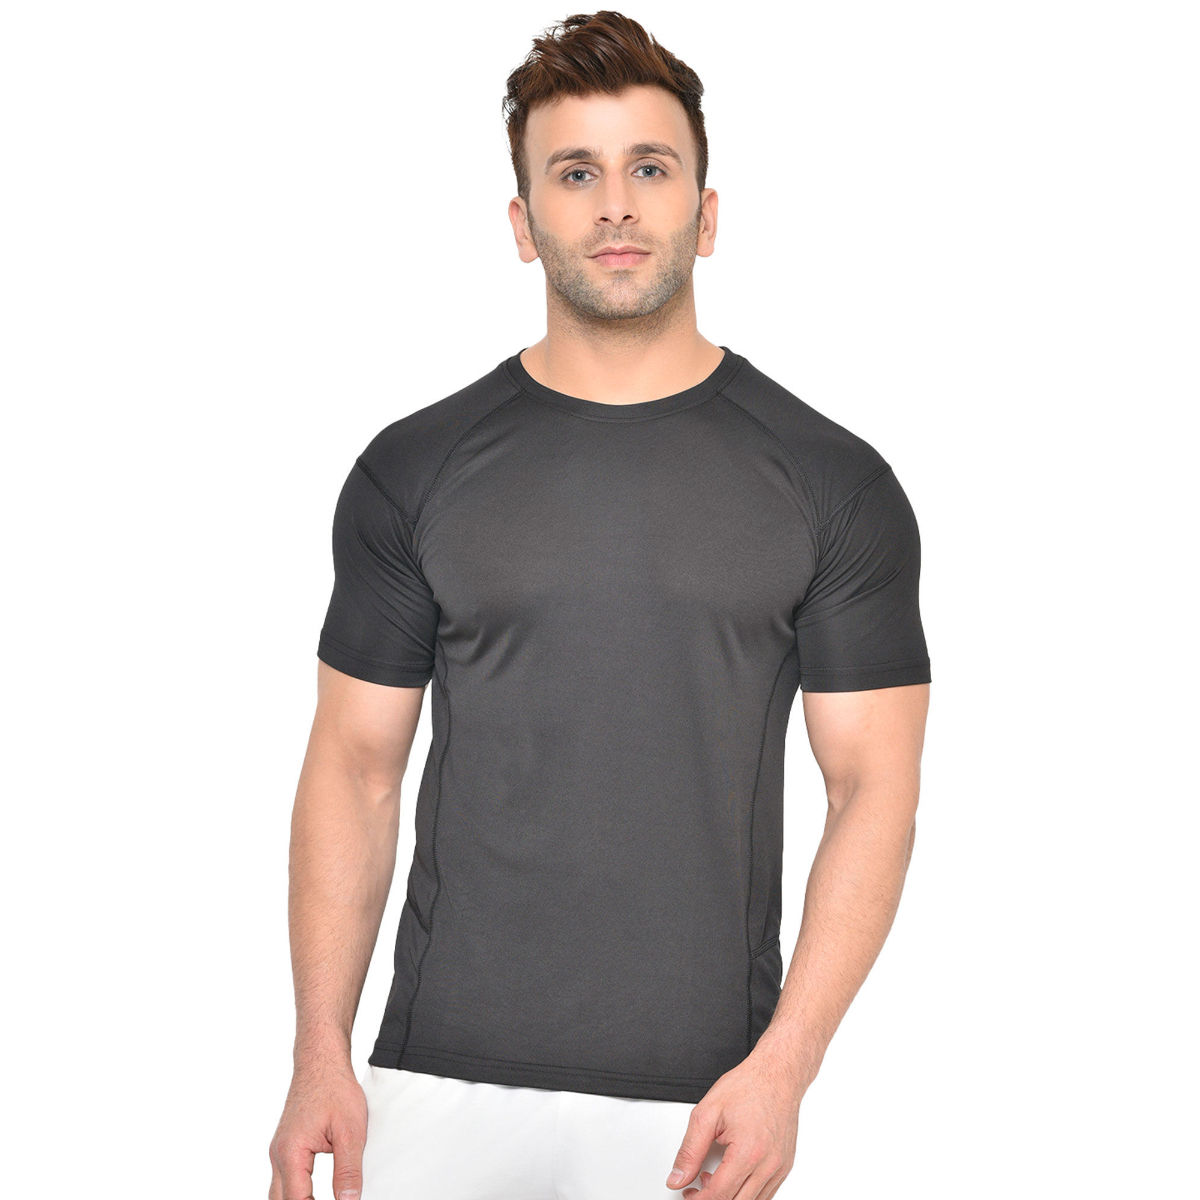 CHKOKKO Men Round Neck Regular Dry Fit Gym Sports T-Shirt (XL)